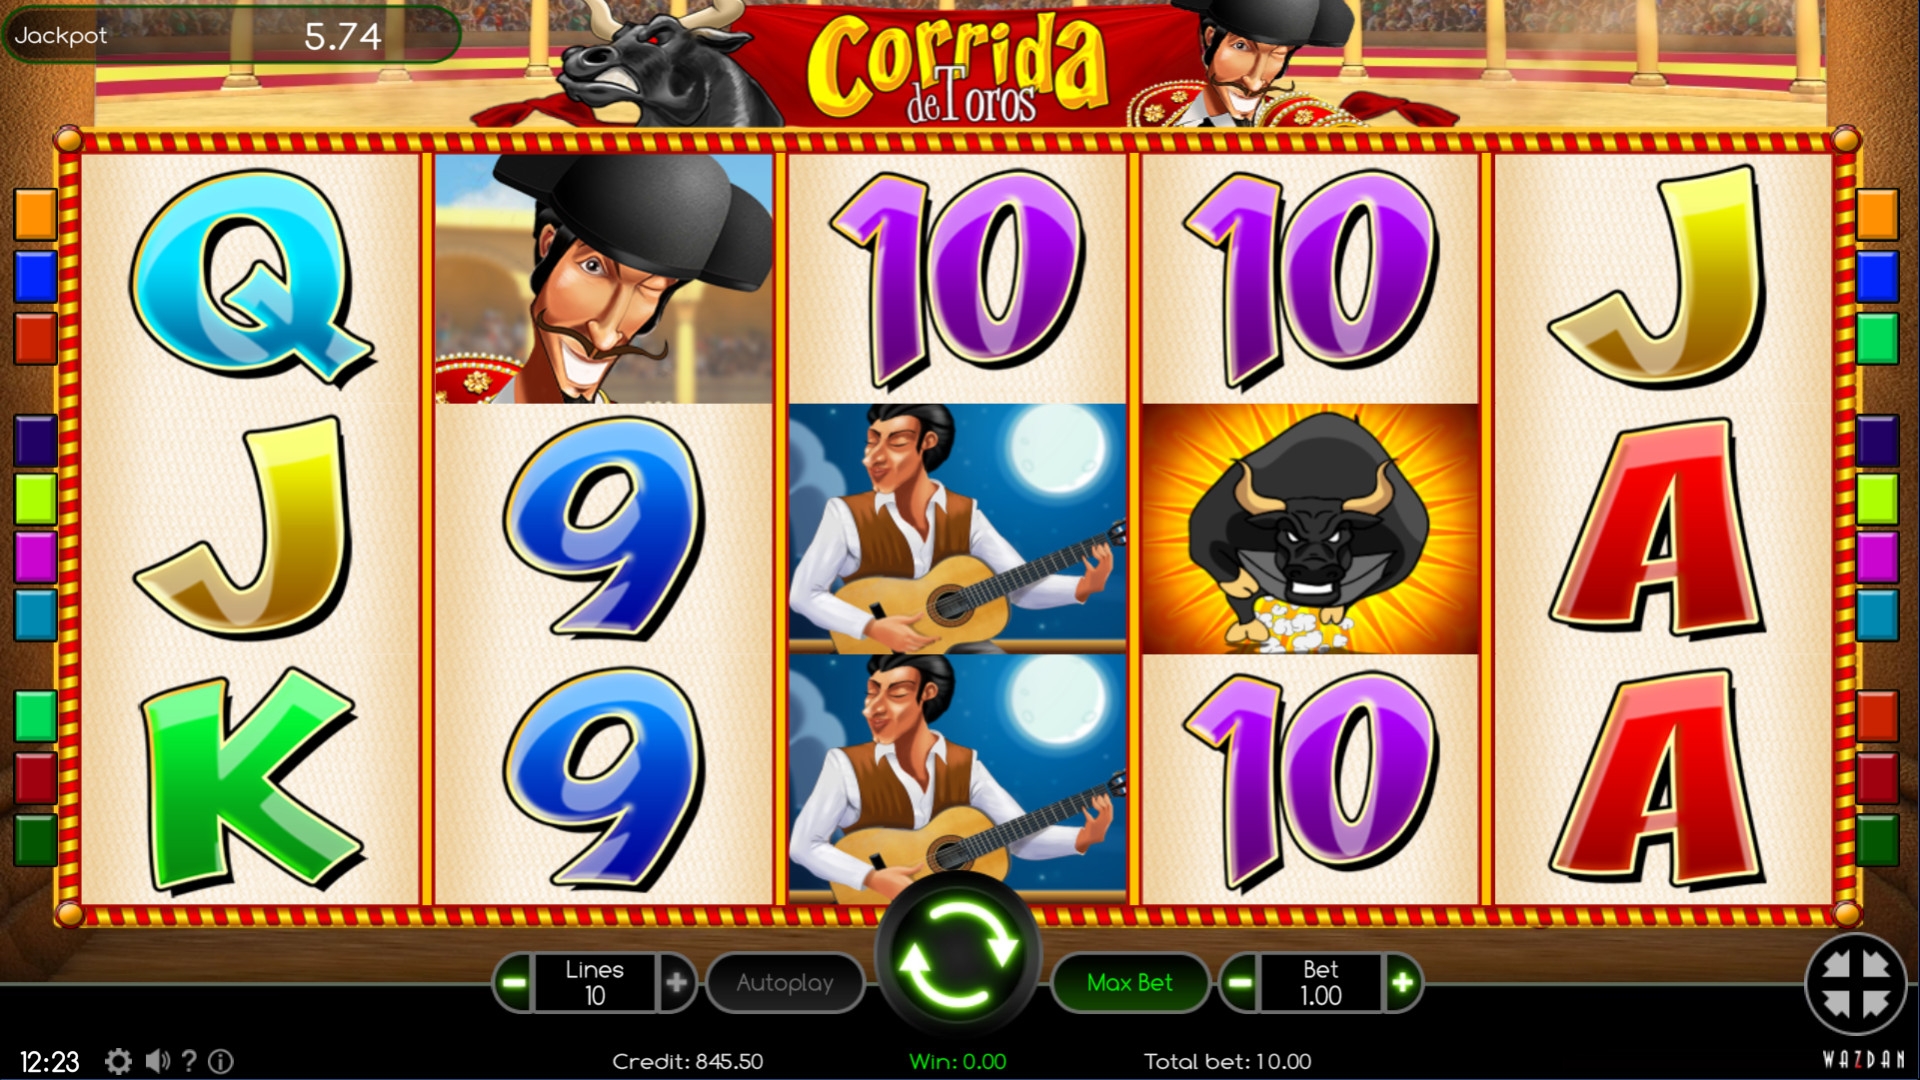 Corrida de Toros (Corrida de Toros) from category Slots